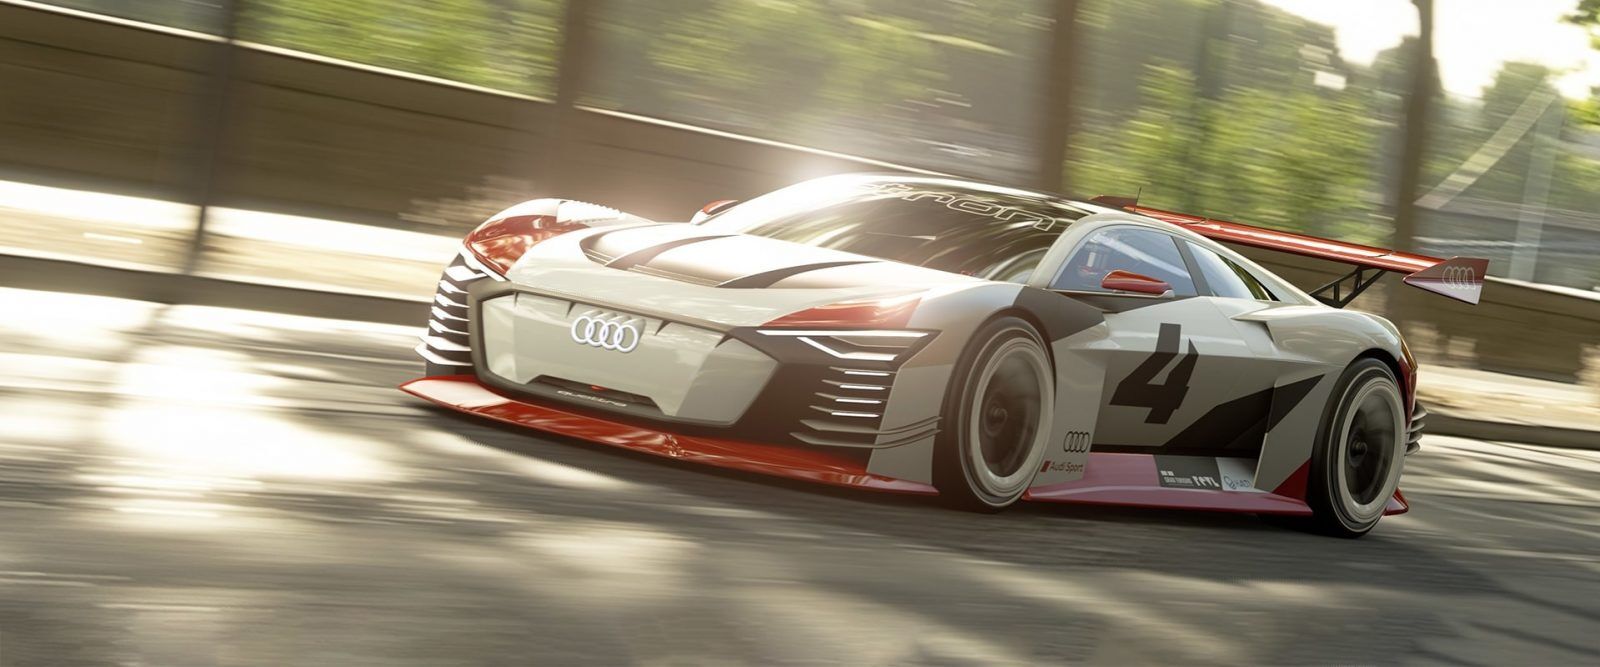 How Audi Recreate Their Cars in Racing Games